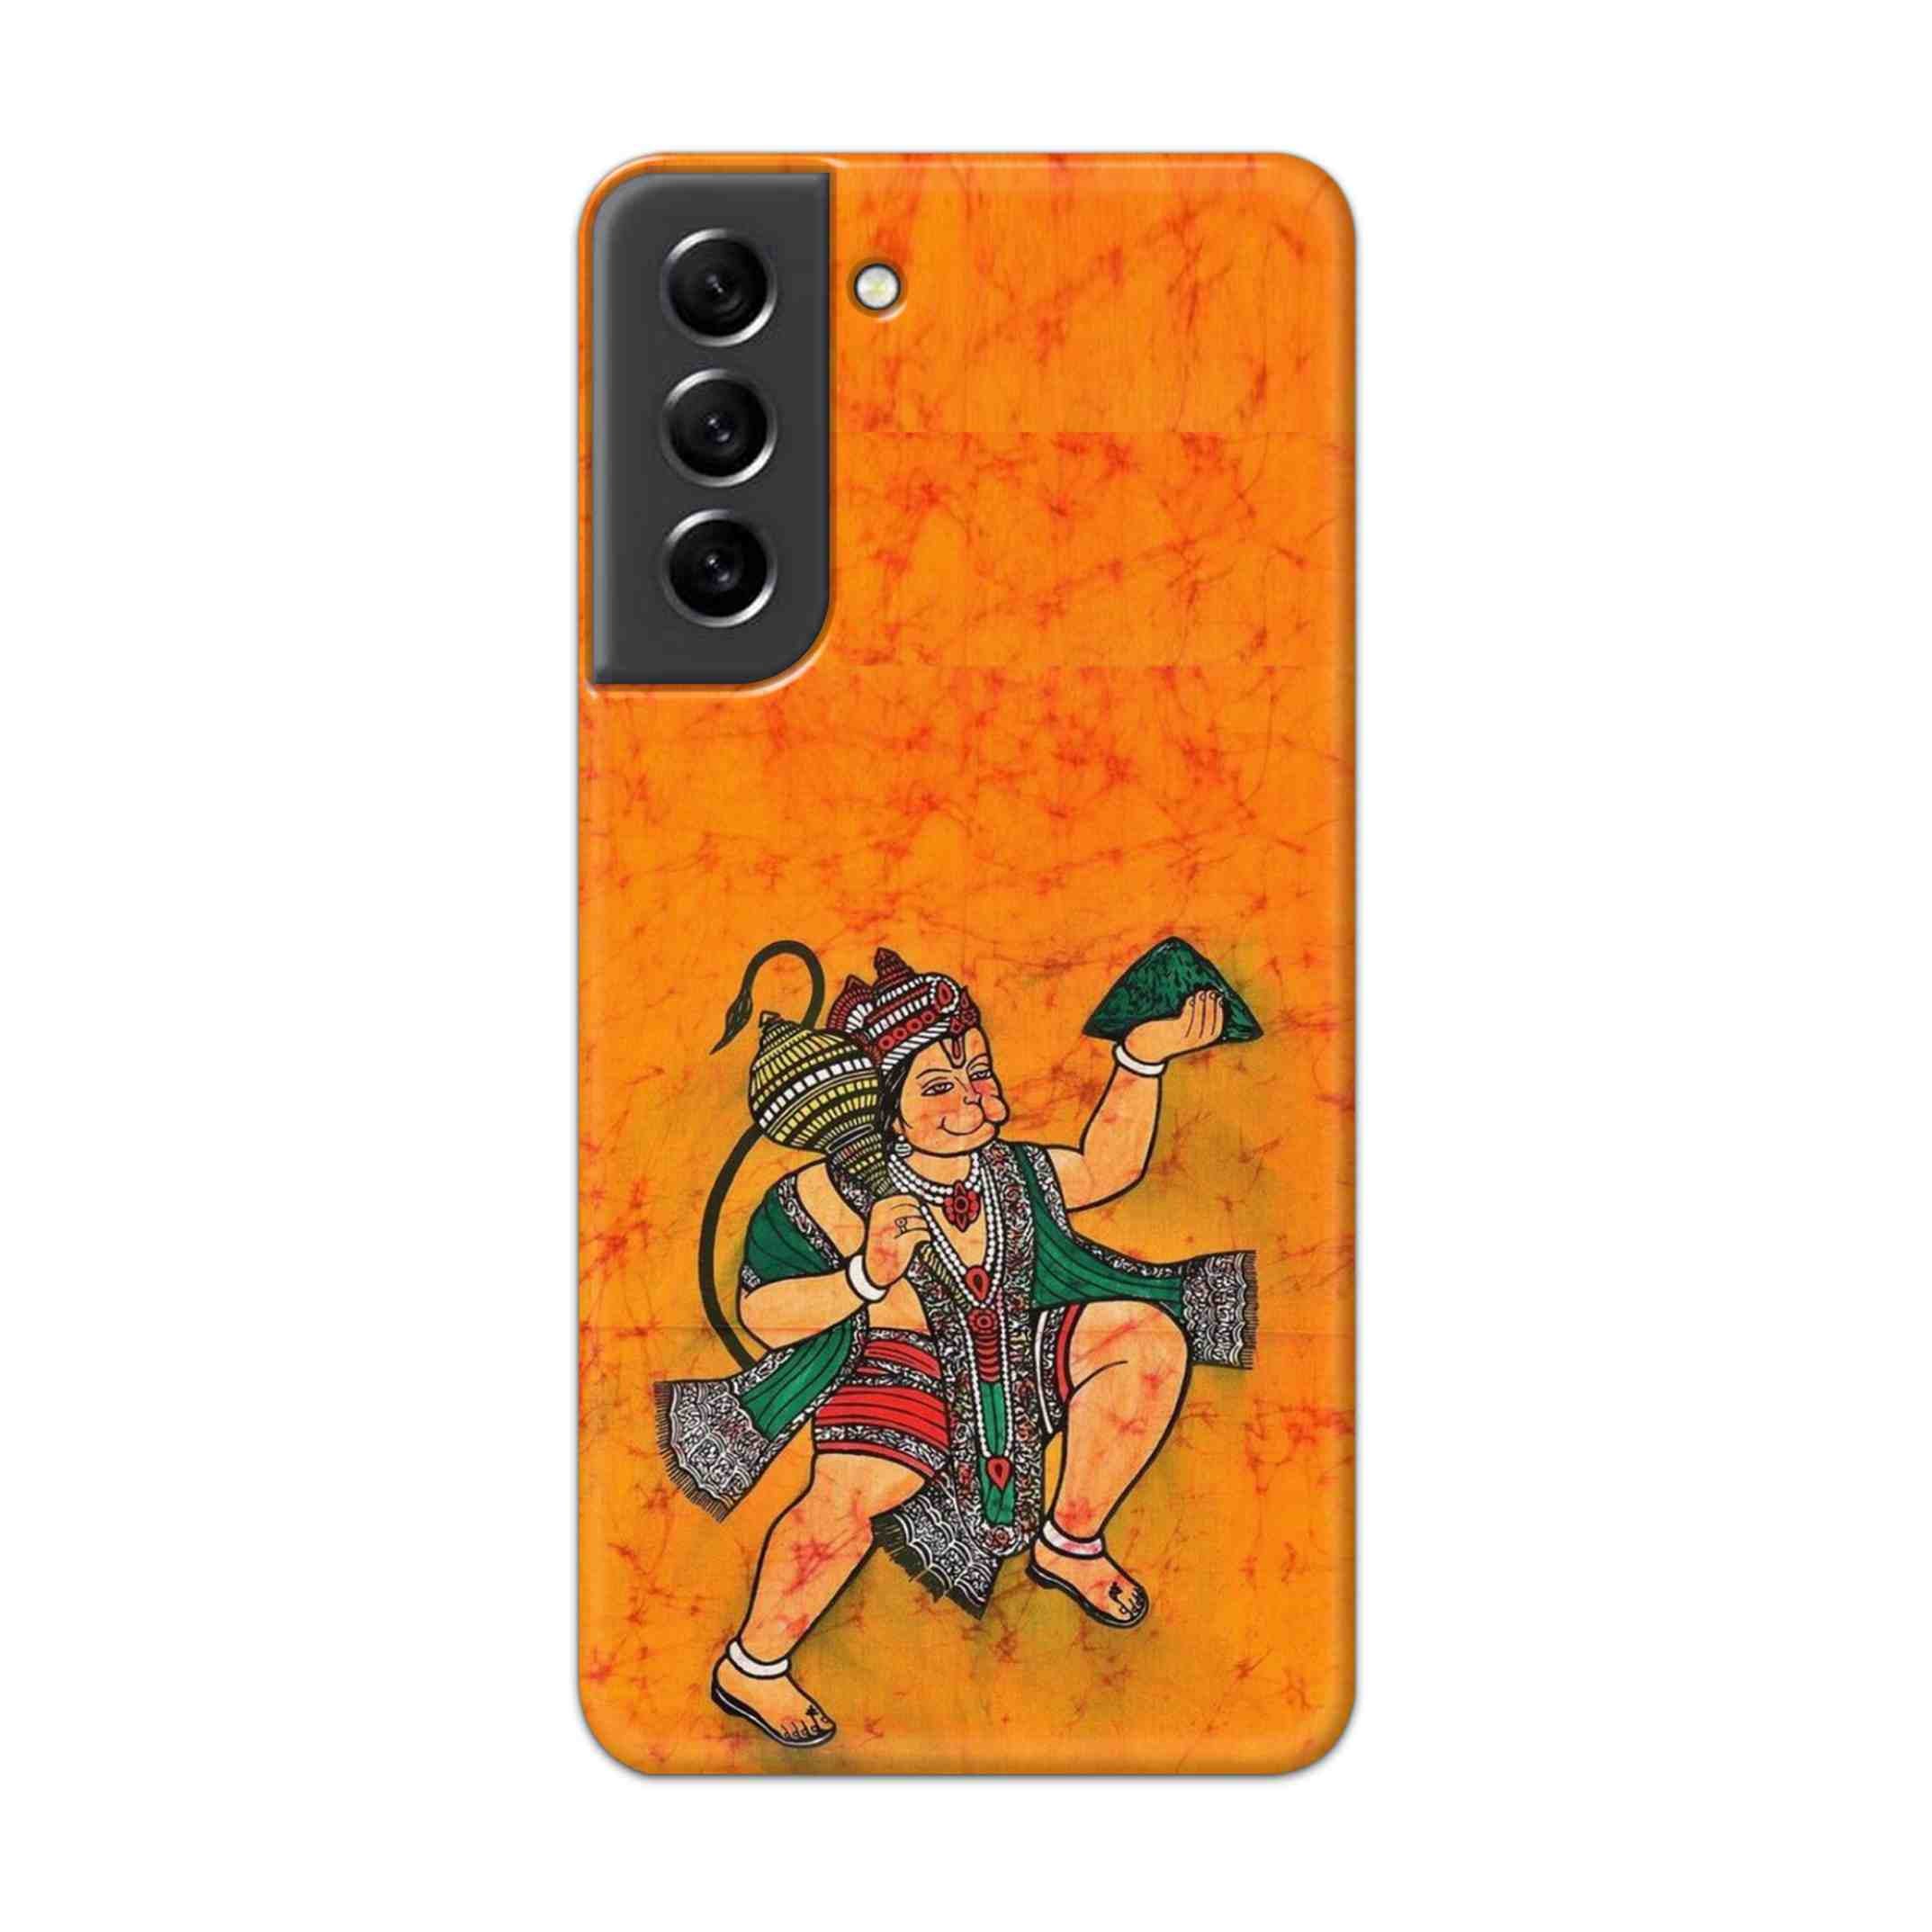 Buy Hanuman Ji Hard Back Mobile Phone Case Cover For Samsung S21 FE Online